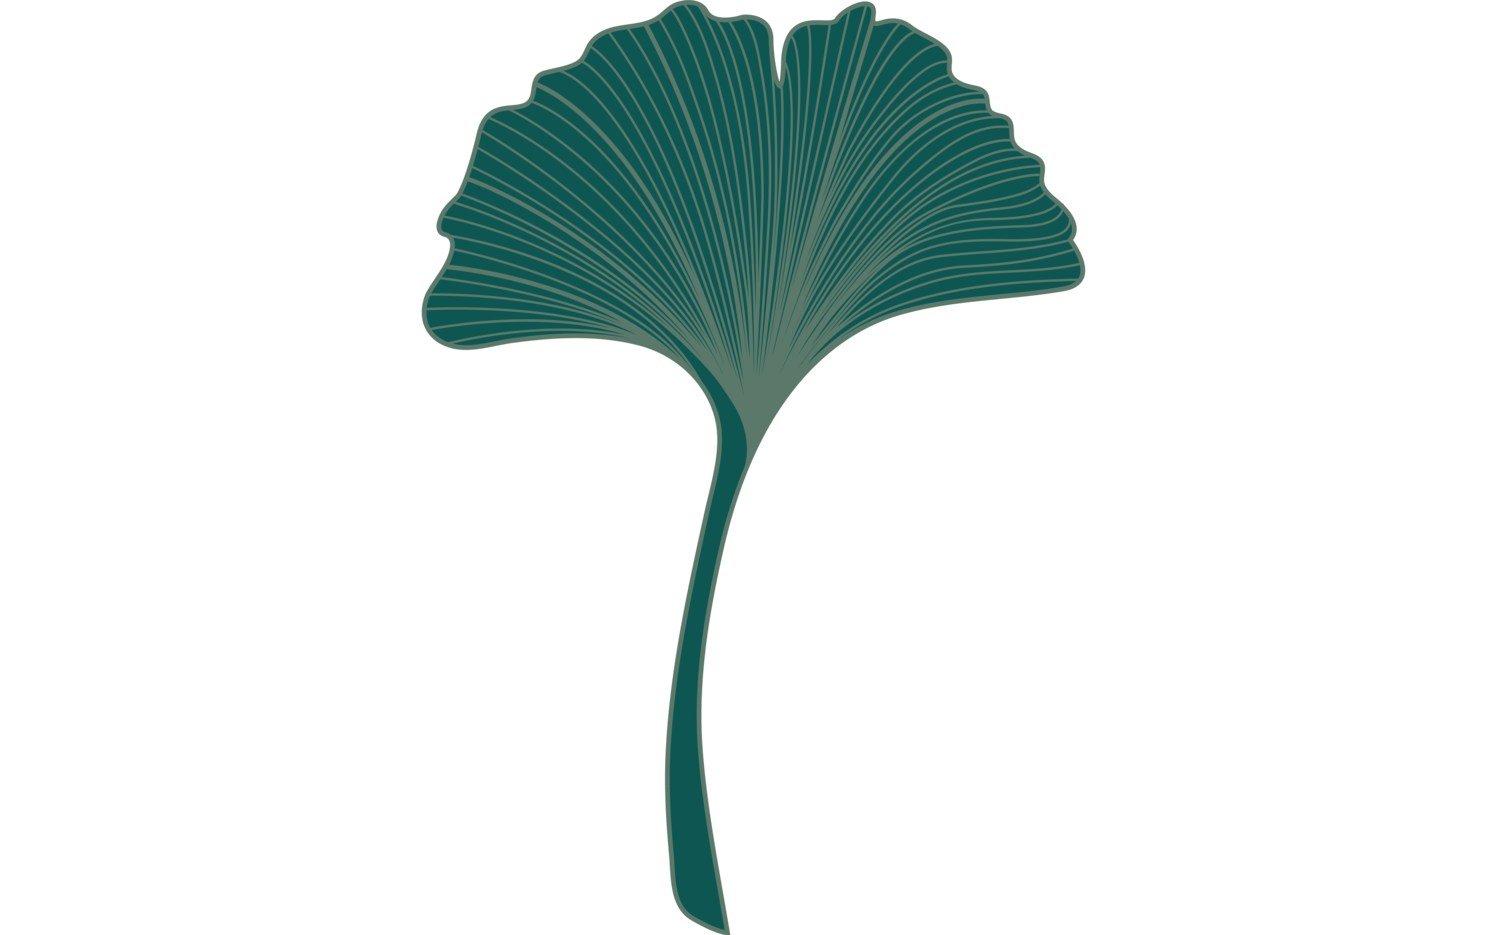 Pollard Tree Care